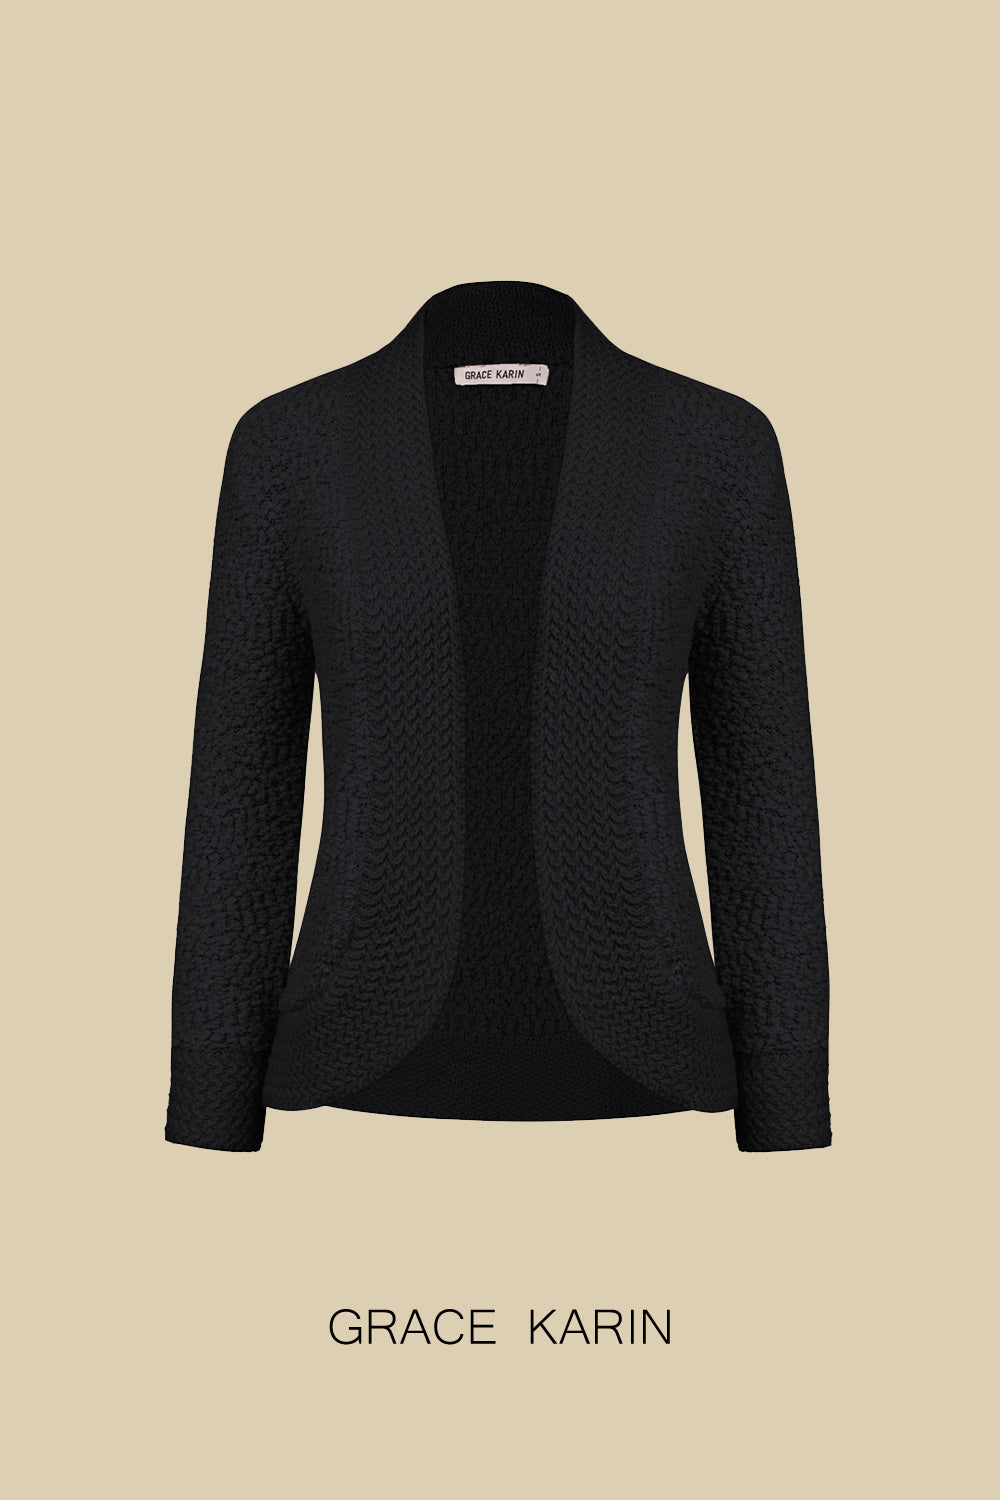 GK Women Contrast Fabric Cardigan Long Sleeve Open Front Irregular Hem Sweater